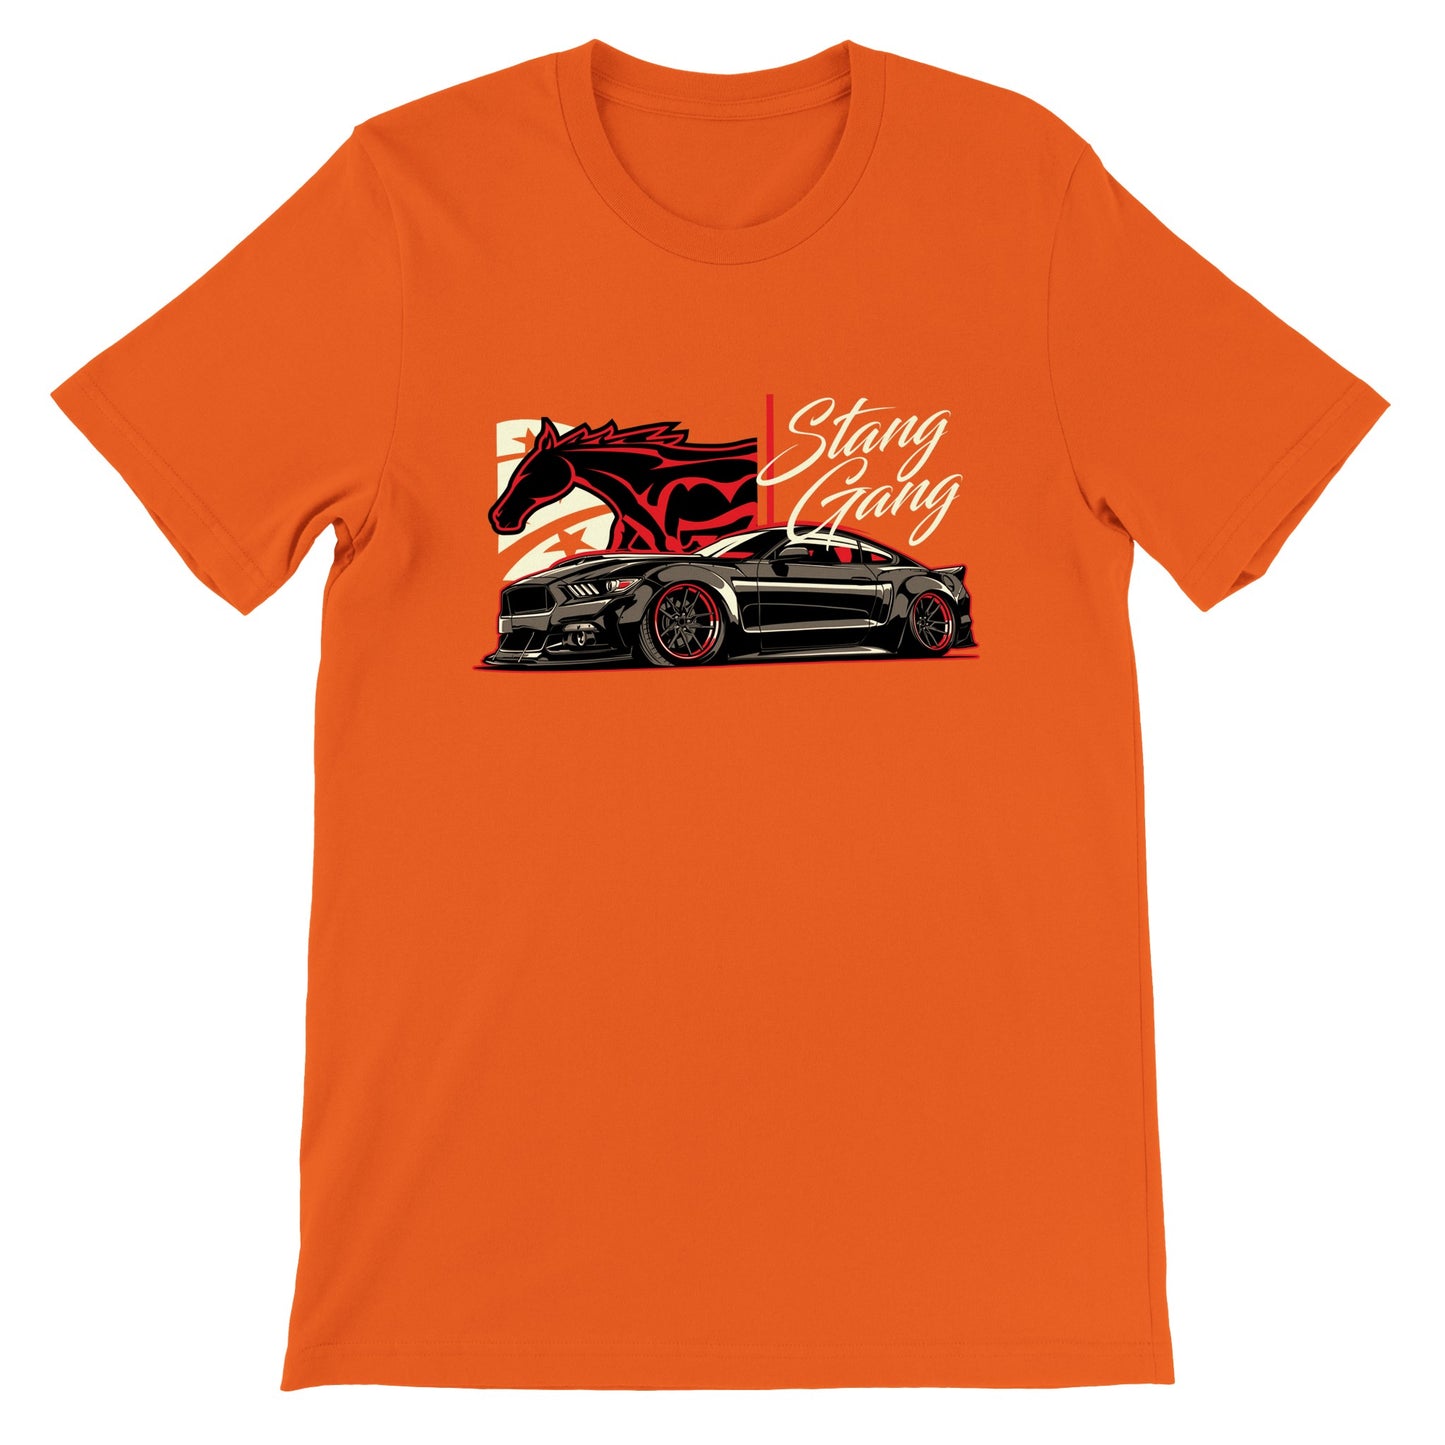 Car T-shirt - Mustang Artwork - Stang Gang - Premium Unisex T-shirt